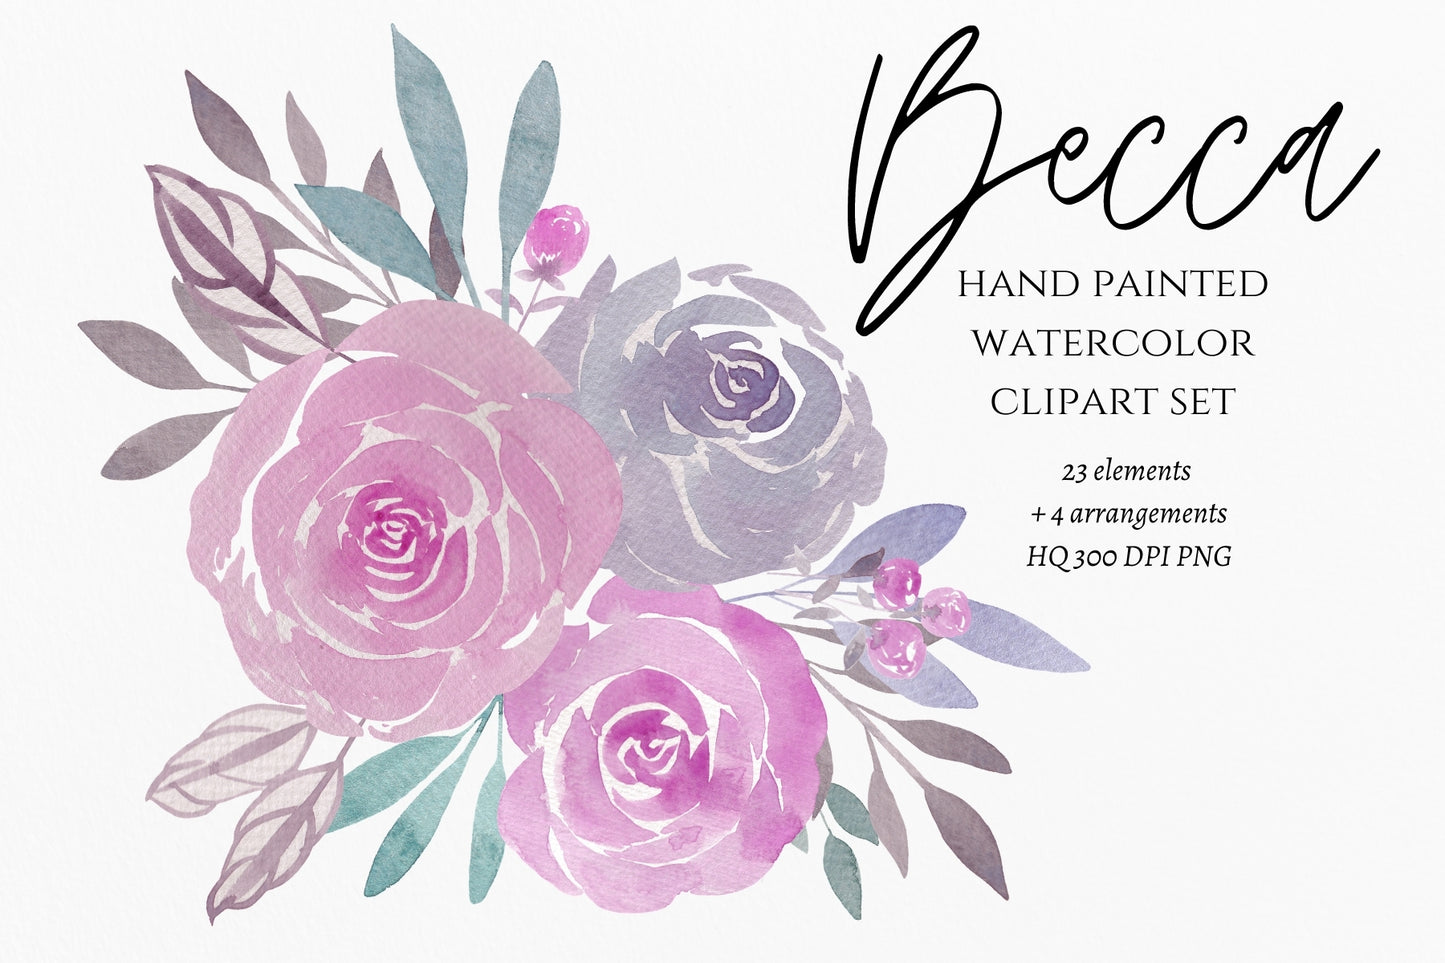 Watercolor Floral Clipart "Becca"